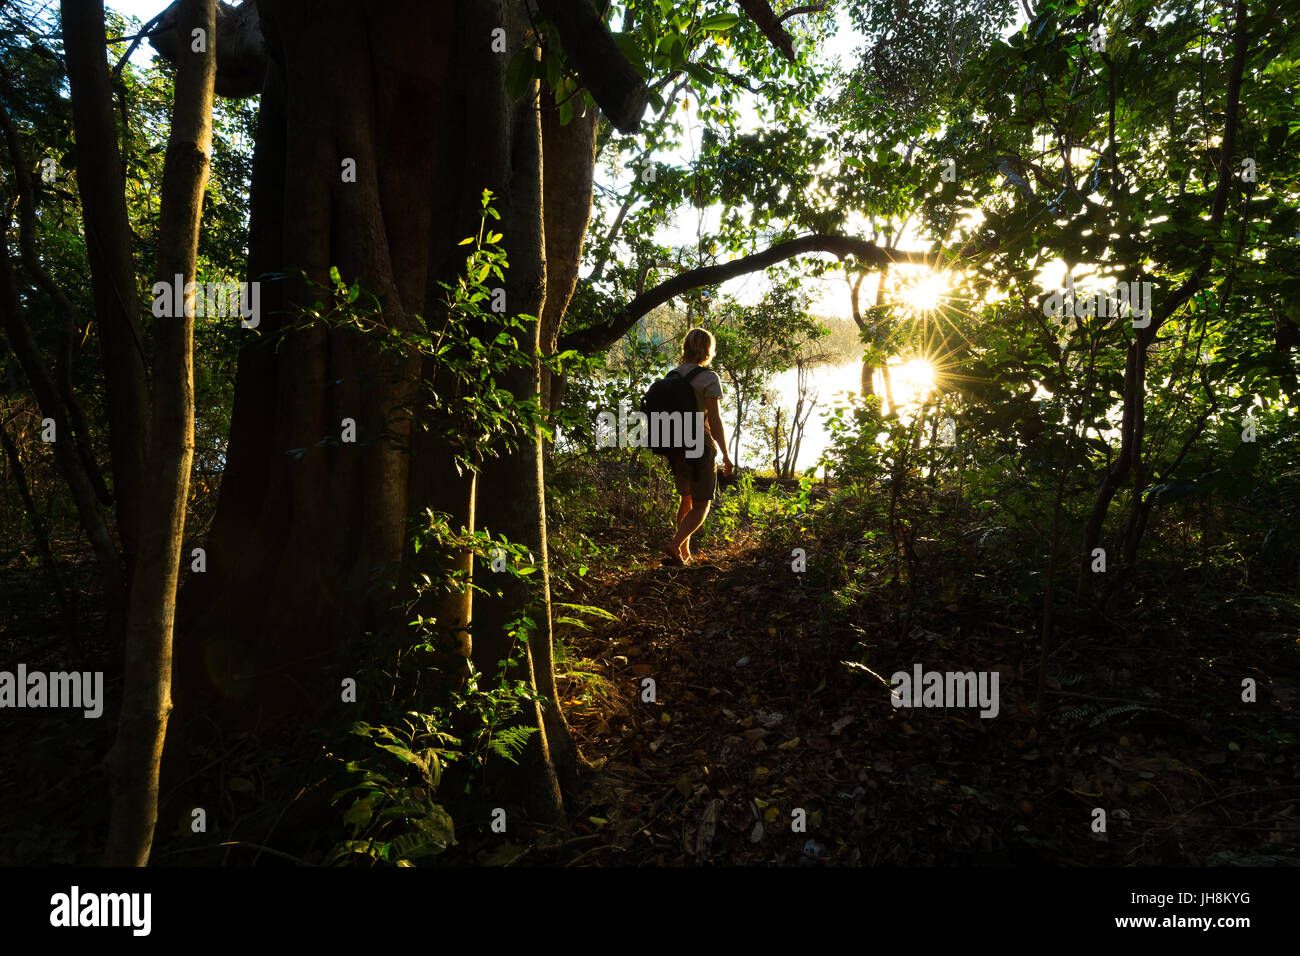 Beautiful bright sunlight illuminates the jungle around a hiker on a trail. Stock Photo